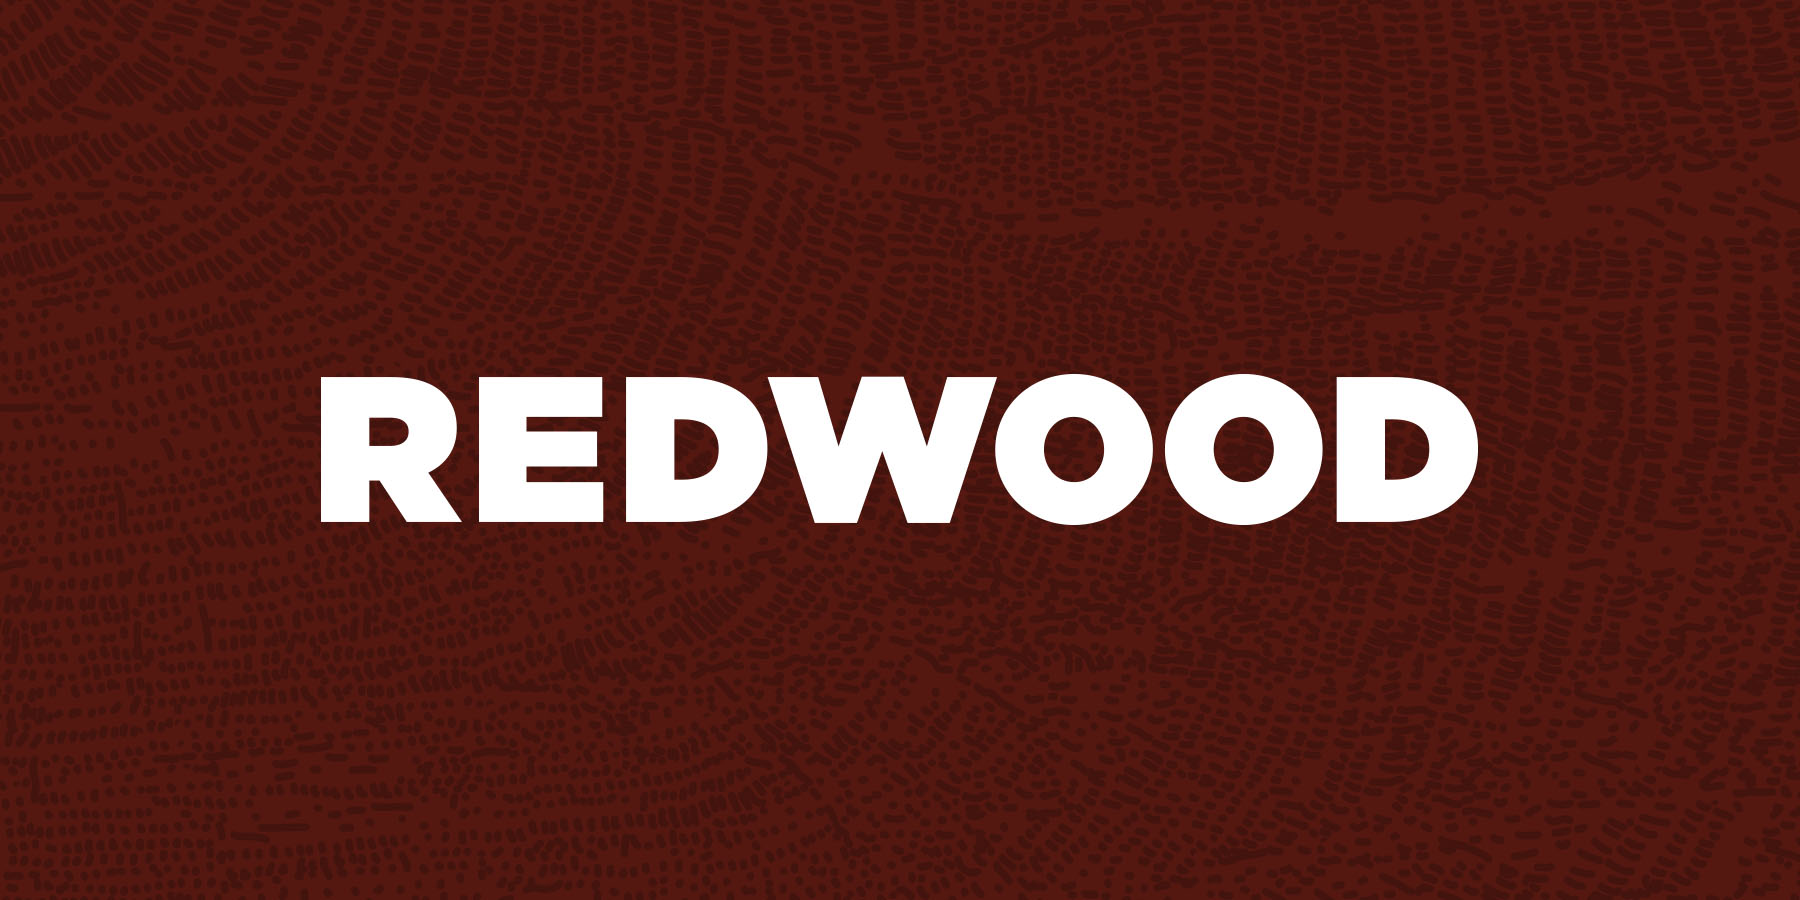 Redwood Housing logo wordmark on background tree ring texture